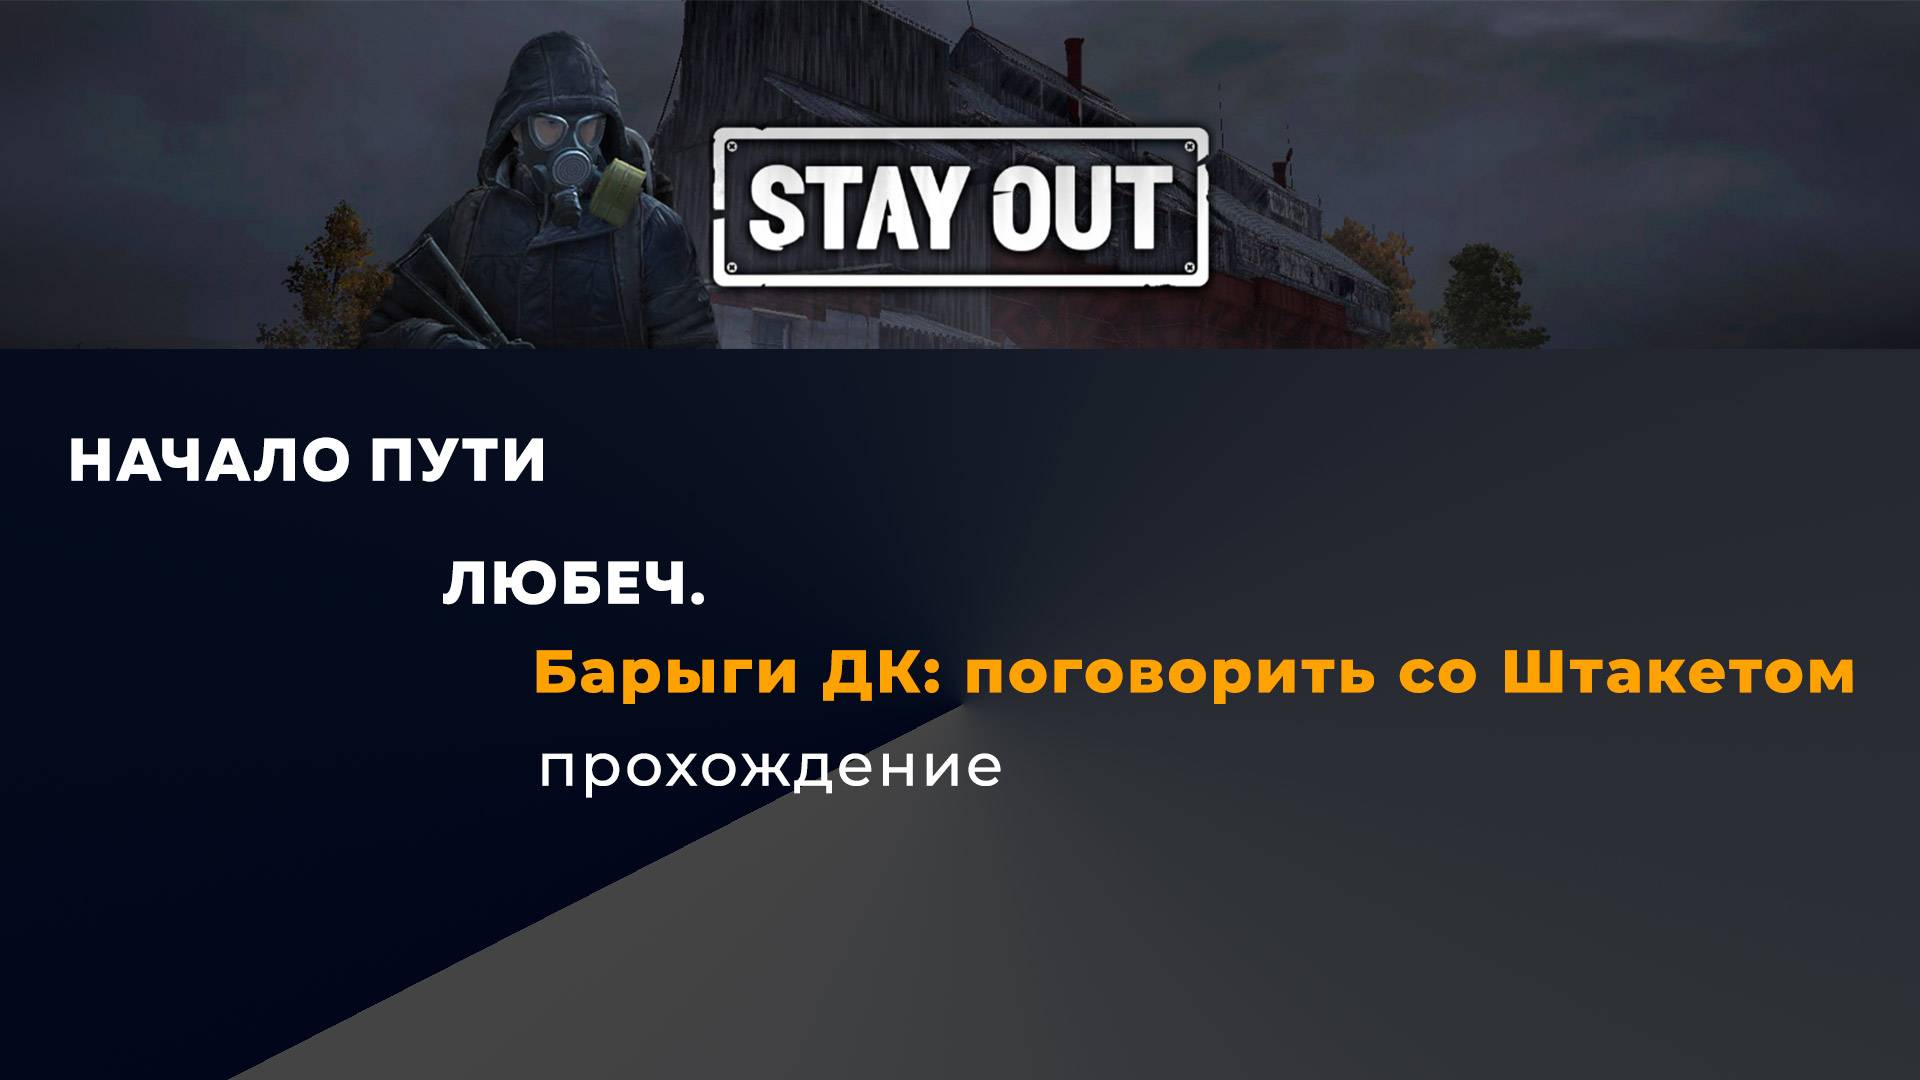 Stay Out_Любеч_Барыги ДК_поговорить со Штакетом